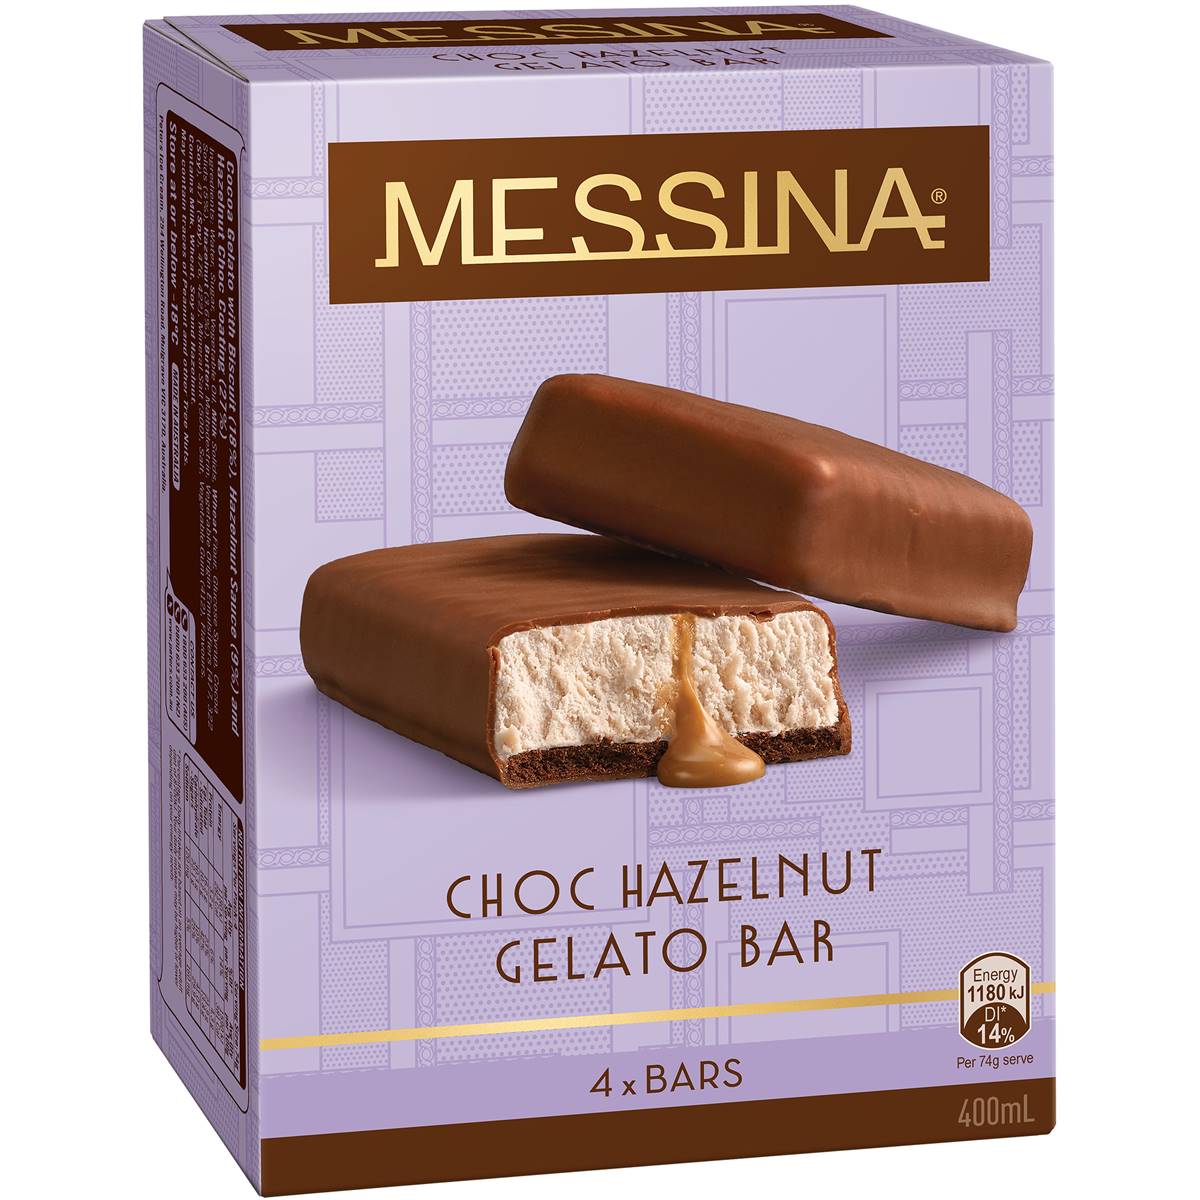 Messina Choc Hazelnut Gelato Bar 4 Pack